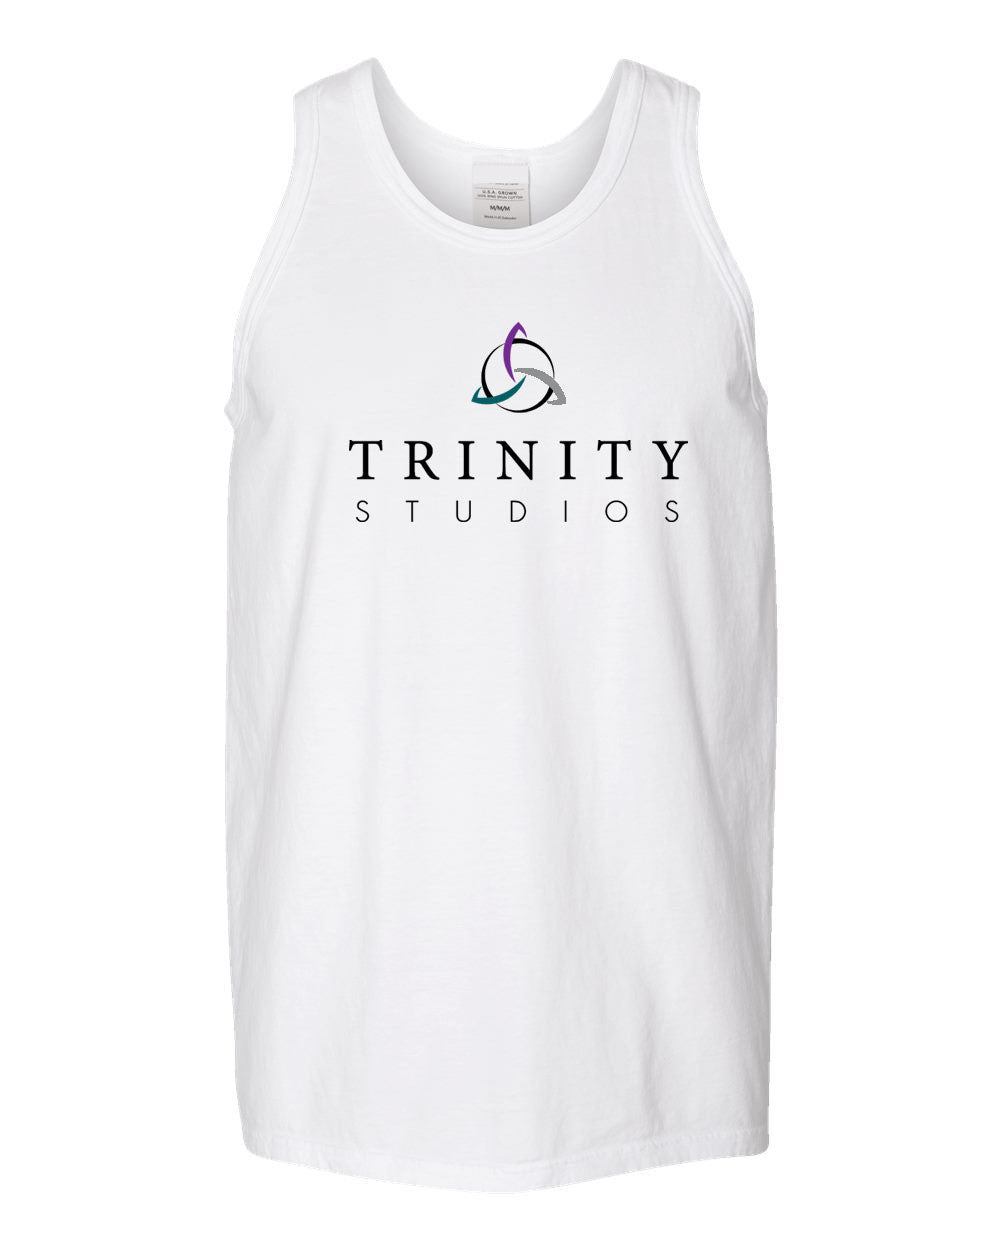 Trinity Design 6 Muscle Tank Top